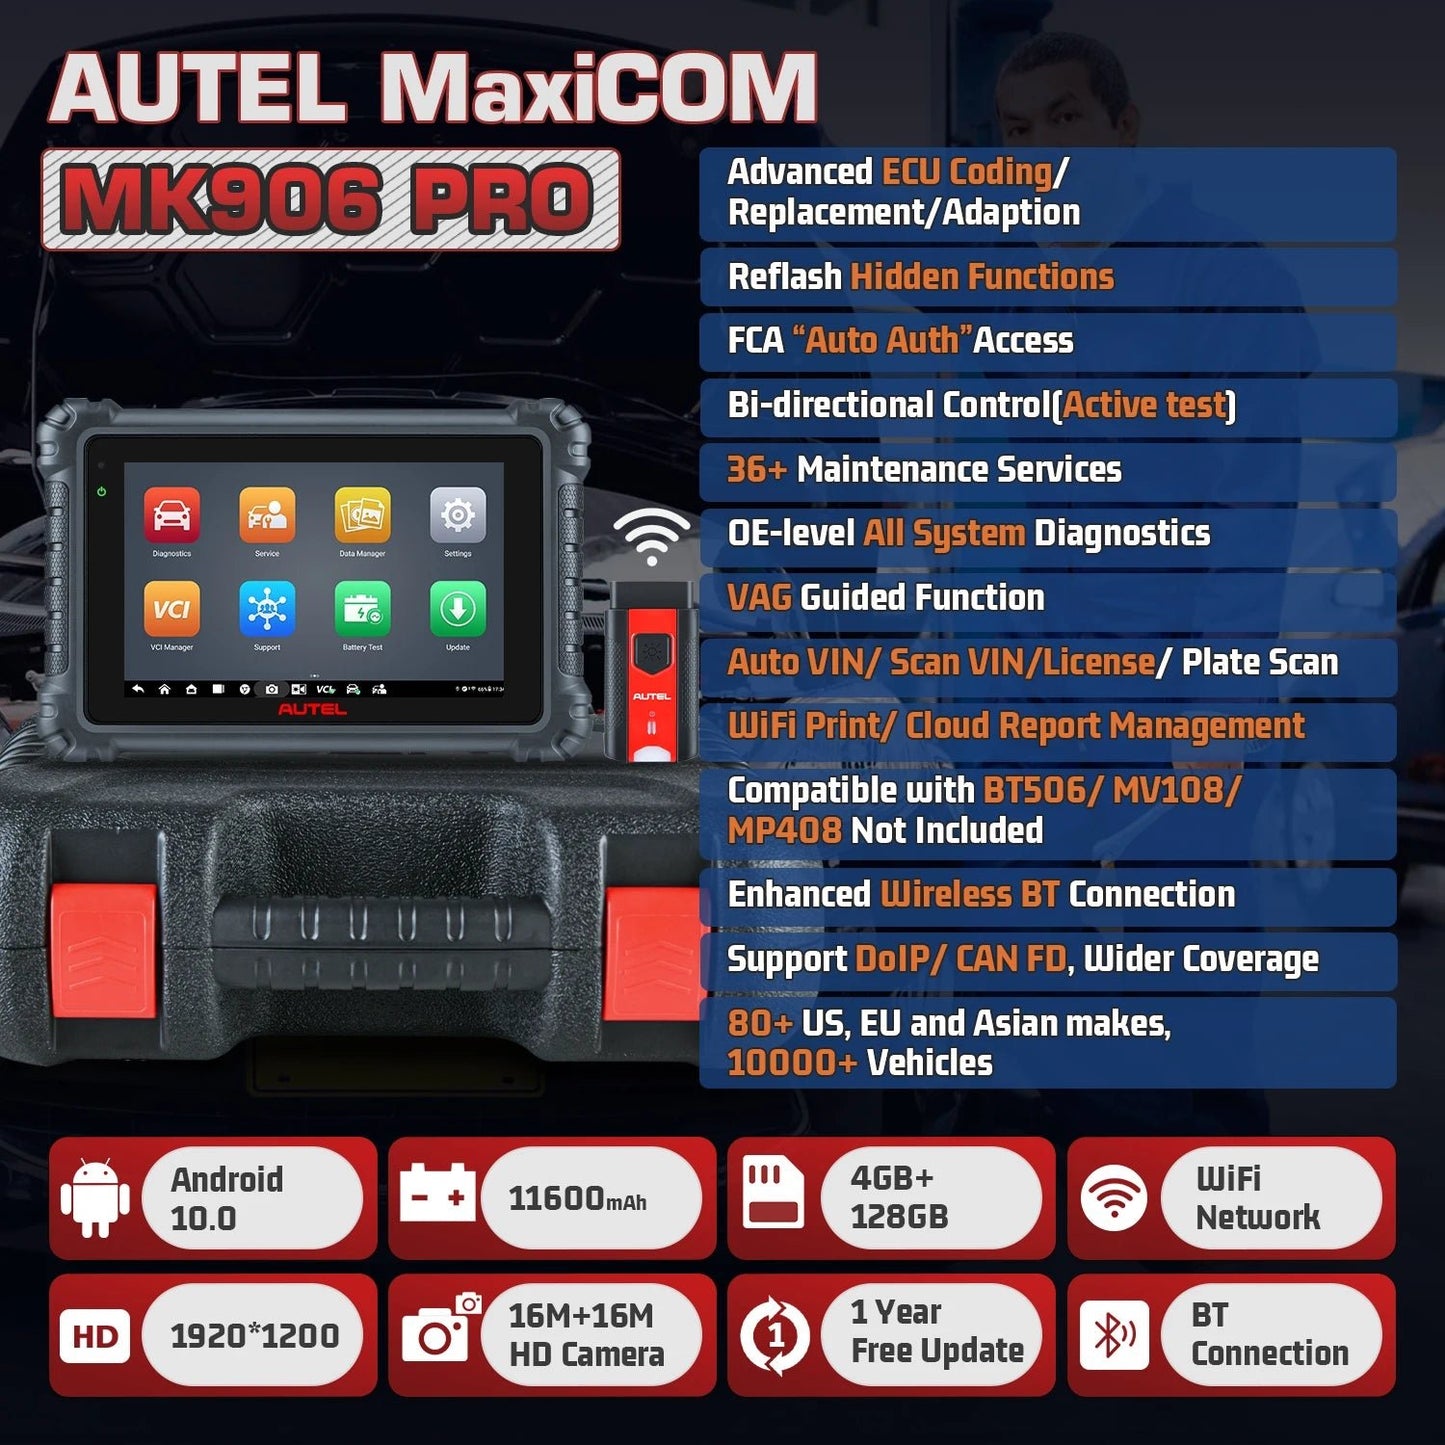 Autel MaxiCOM MK906 Pro Diagnostic Tool Auto Scanner with ECU Coding, Active Test, 36+ Services, Hardware Upgrade of MK906BT - Dynamex